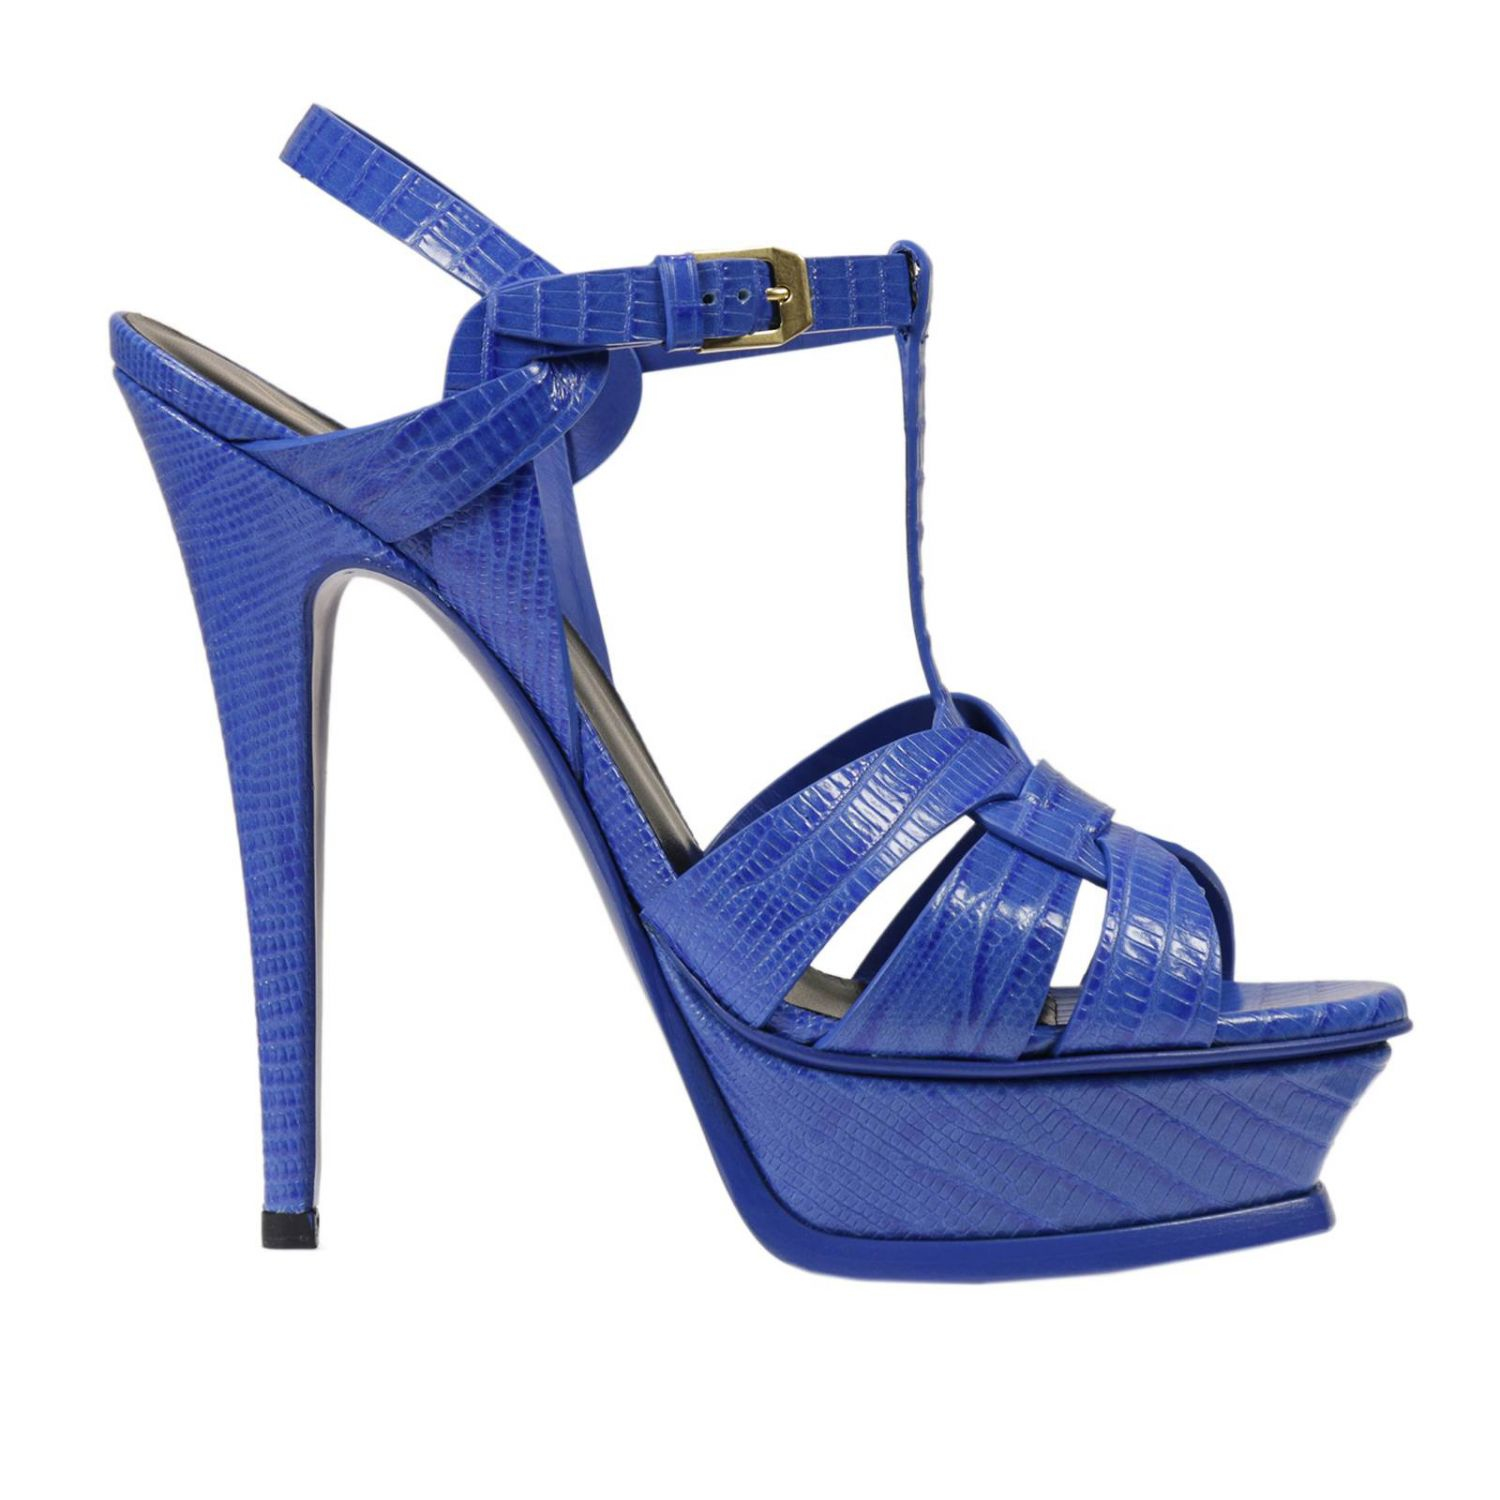 Saint laurent Heeled Sandals Tribute Sandal Heel 10 4 Patent in Blue | Lyst